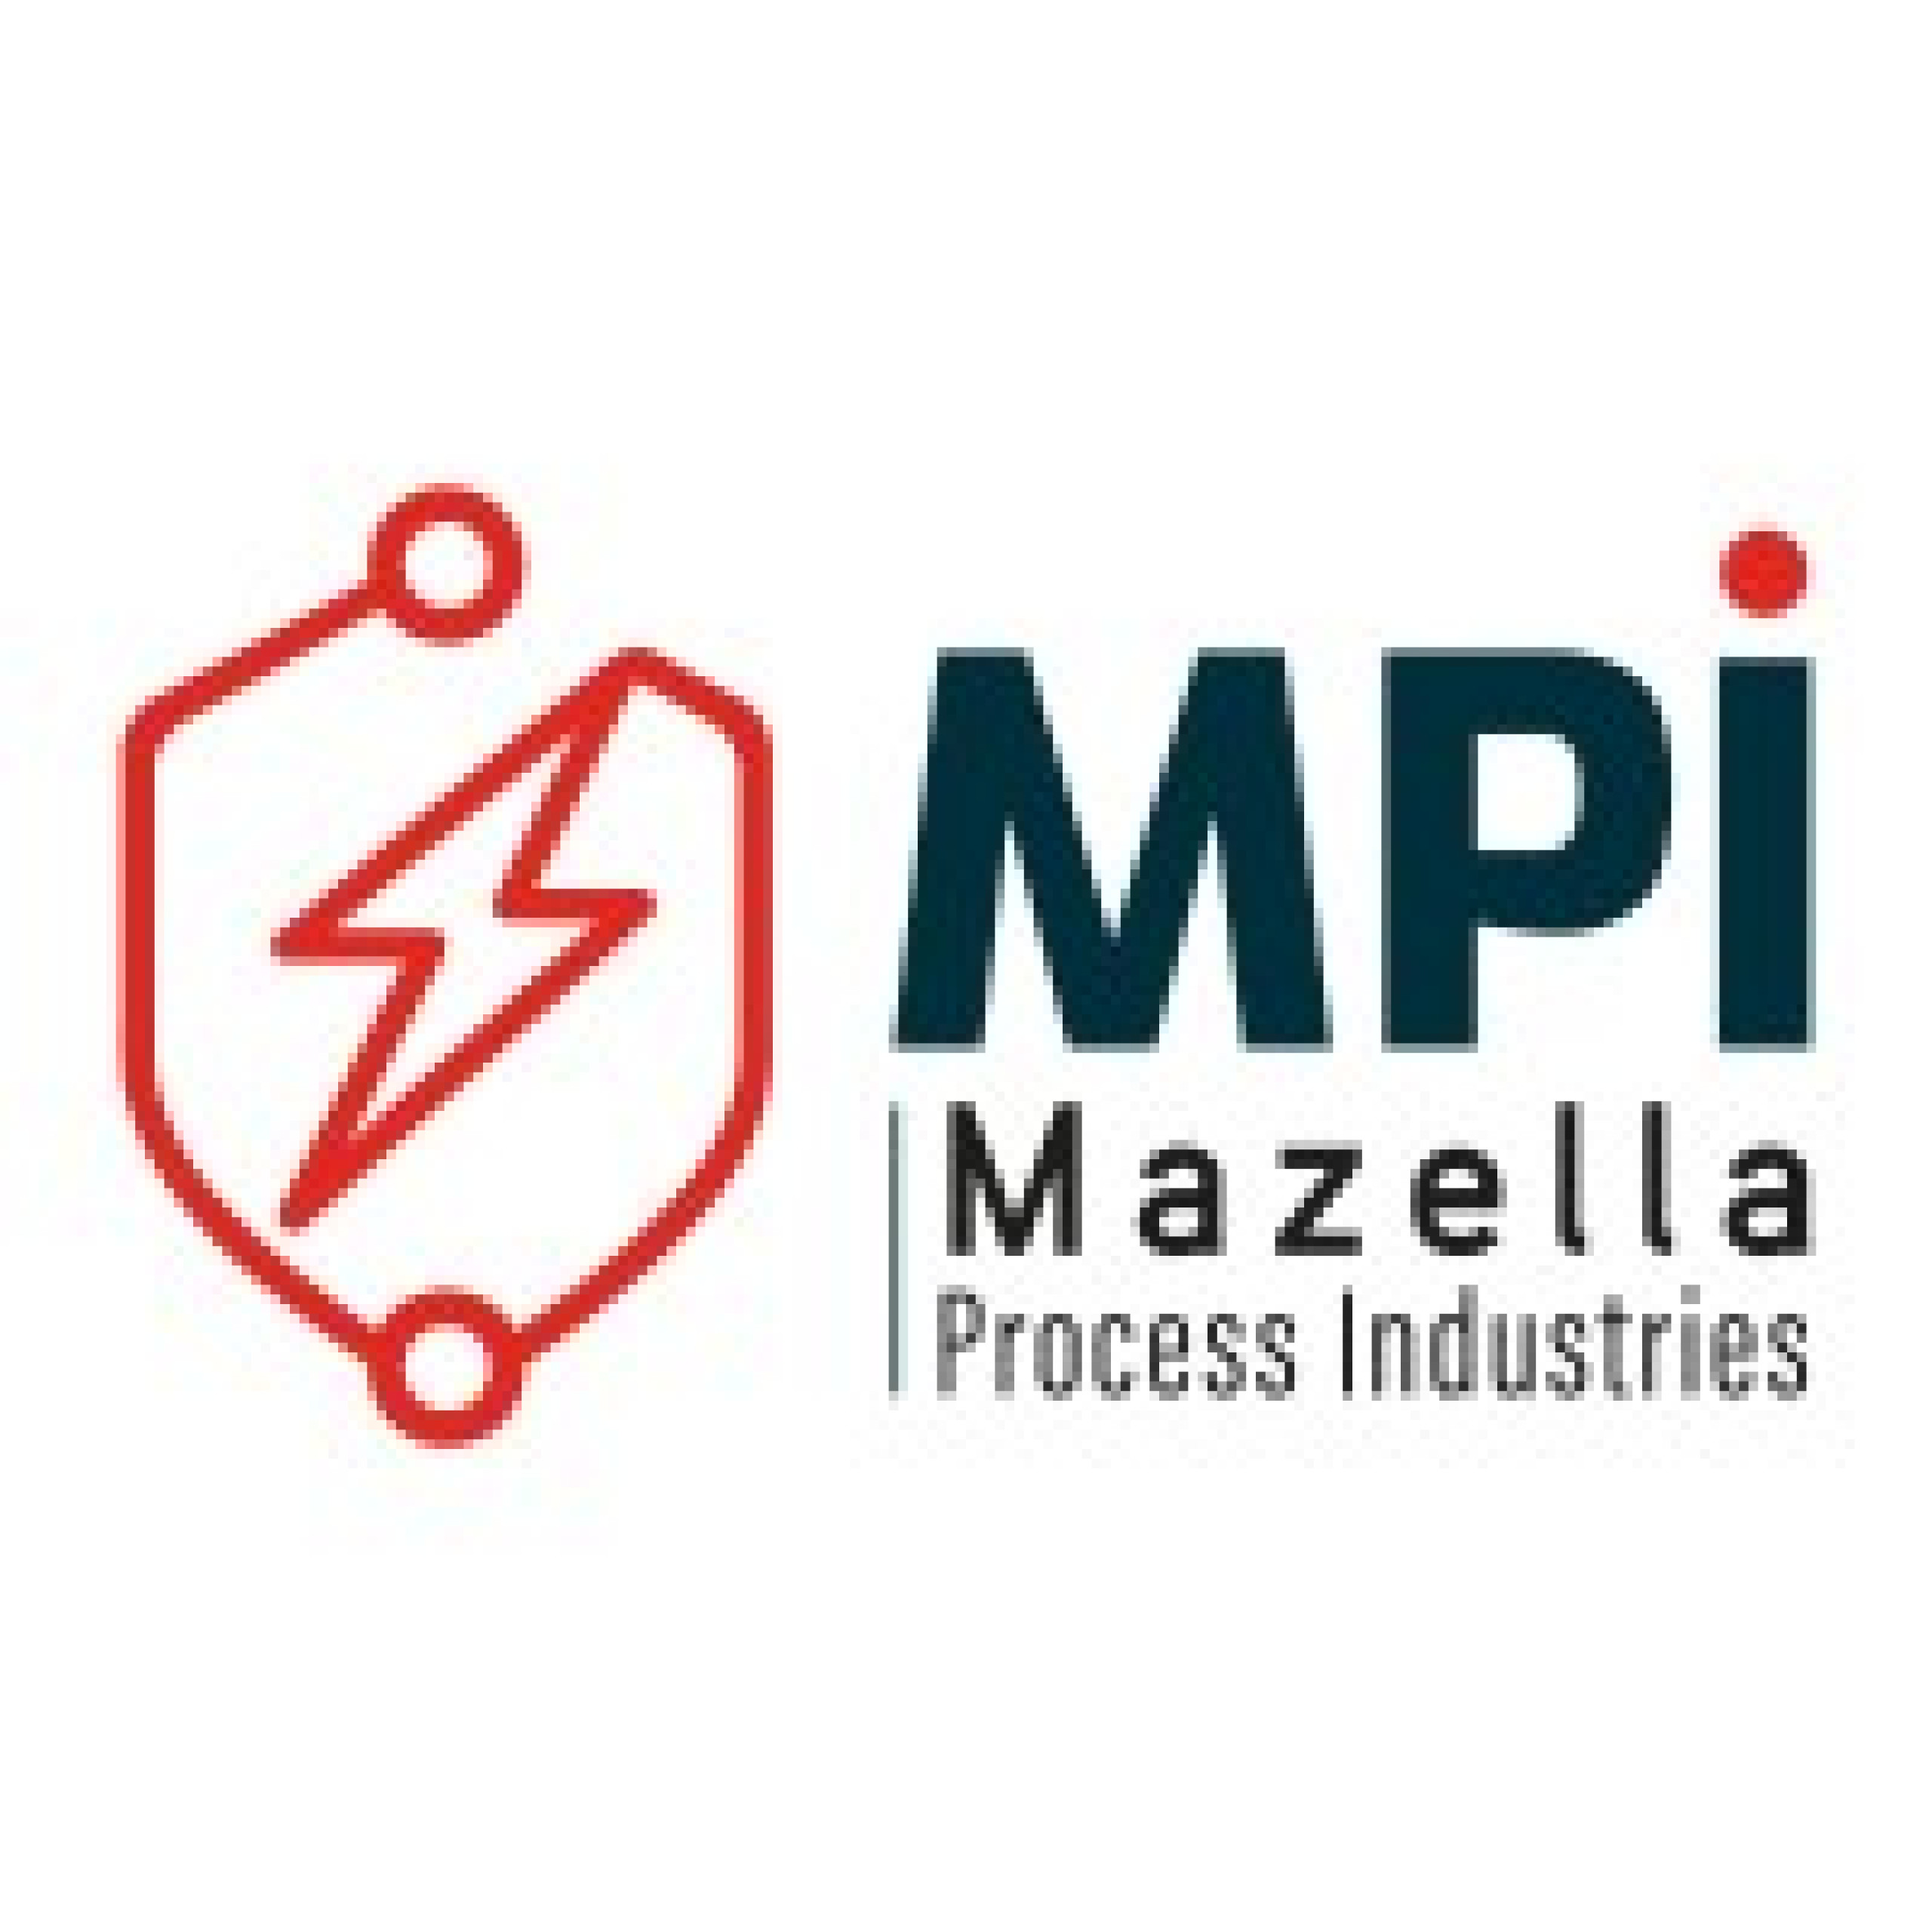 Mazella Process Industrie